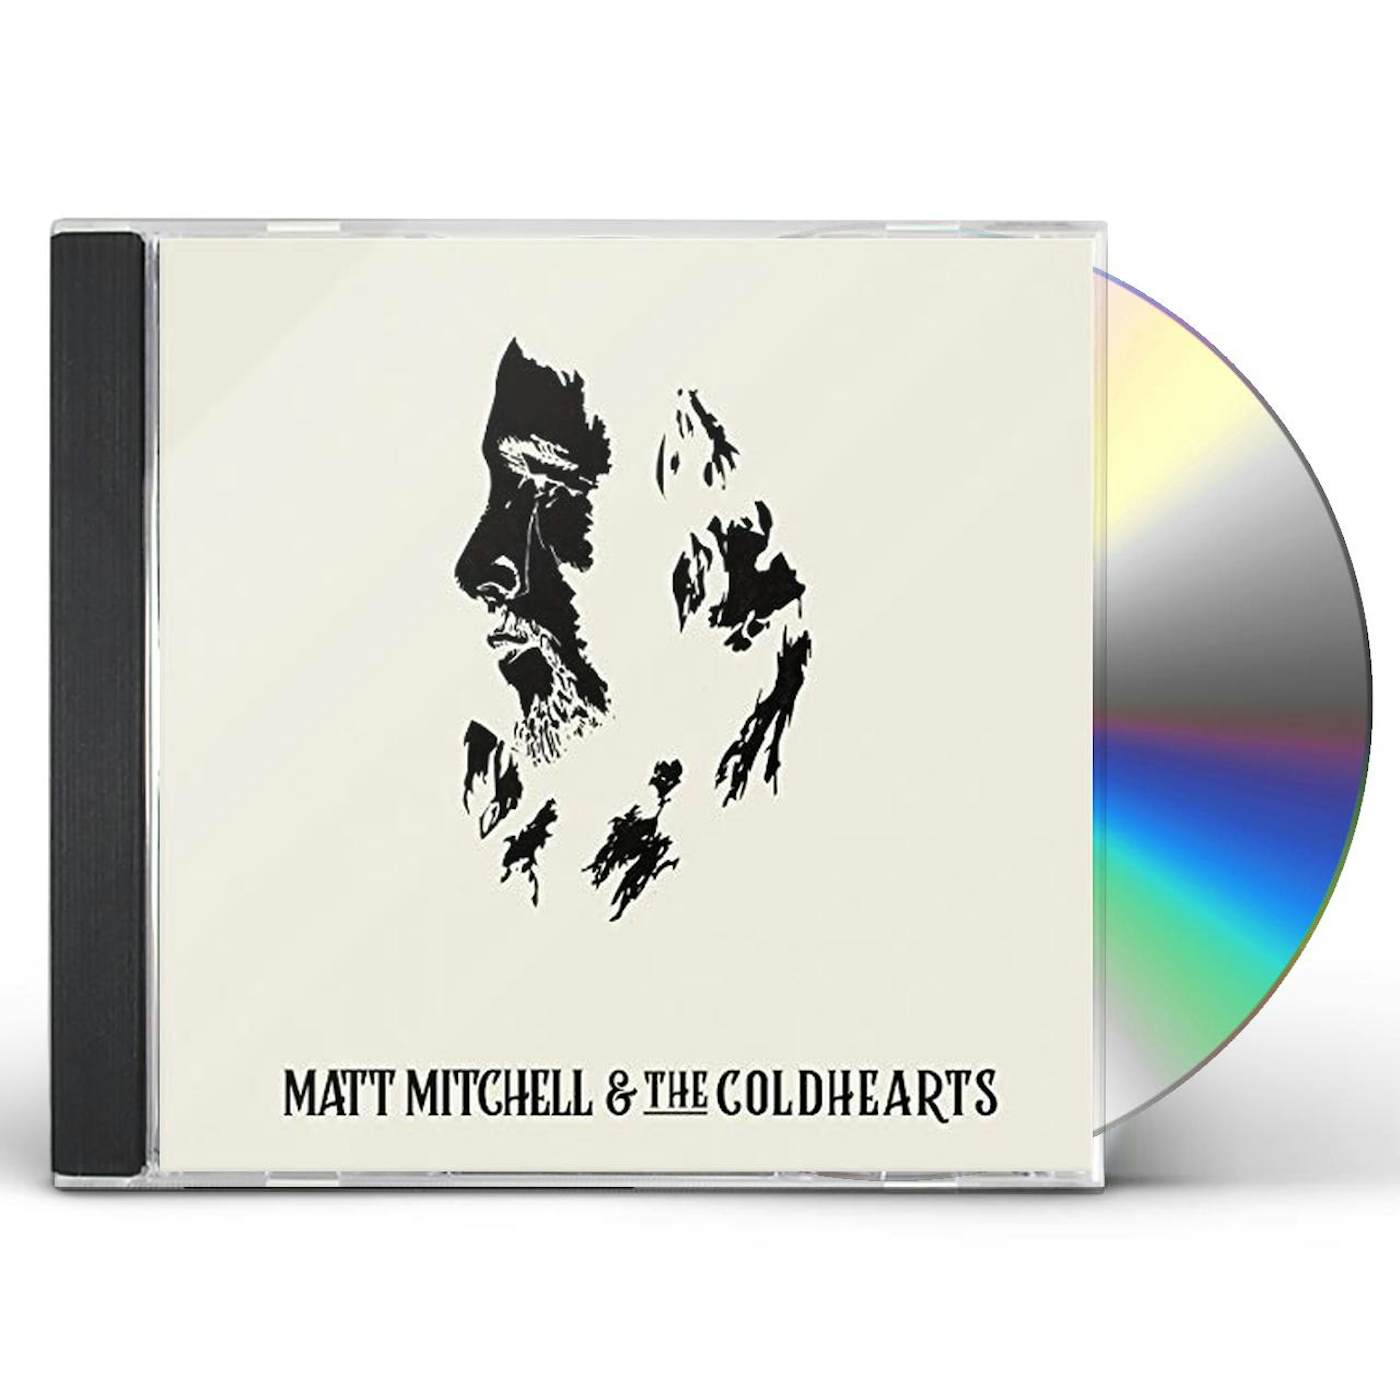 MATT MITCHELL & THE COLDHEARTS CD